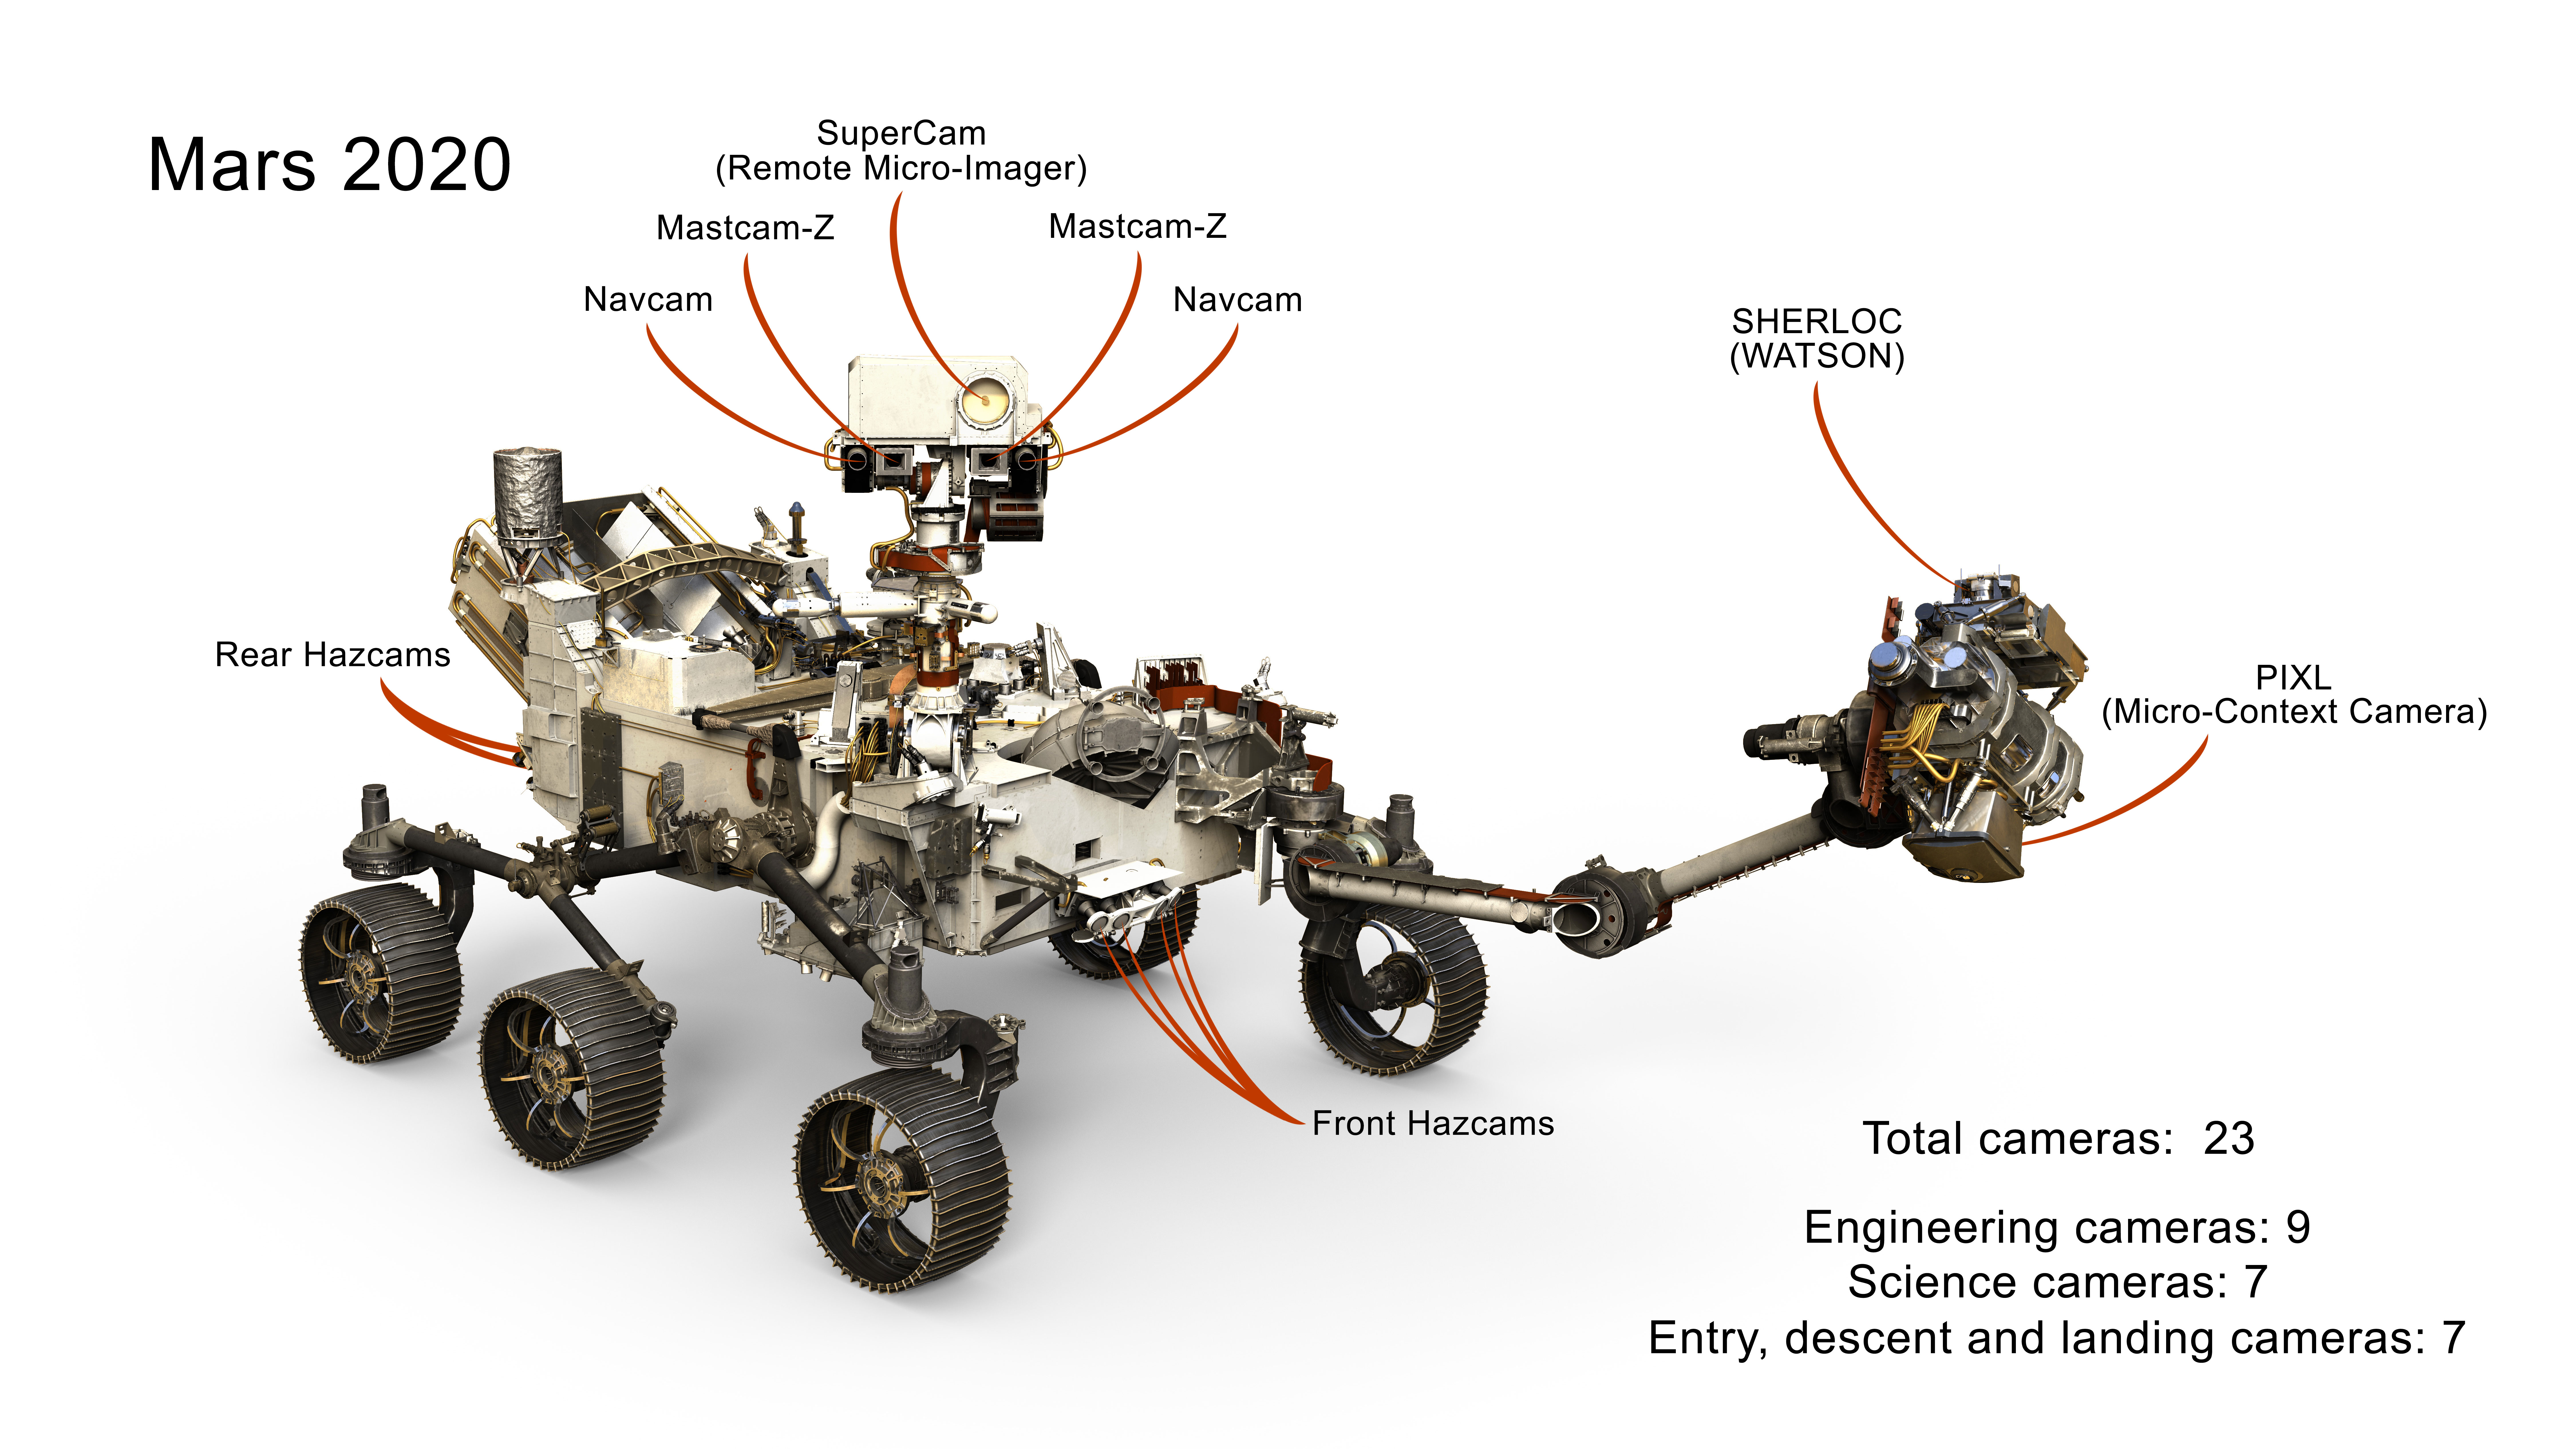 Selection of cameras on NASA's 2020 Mars rover